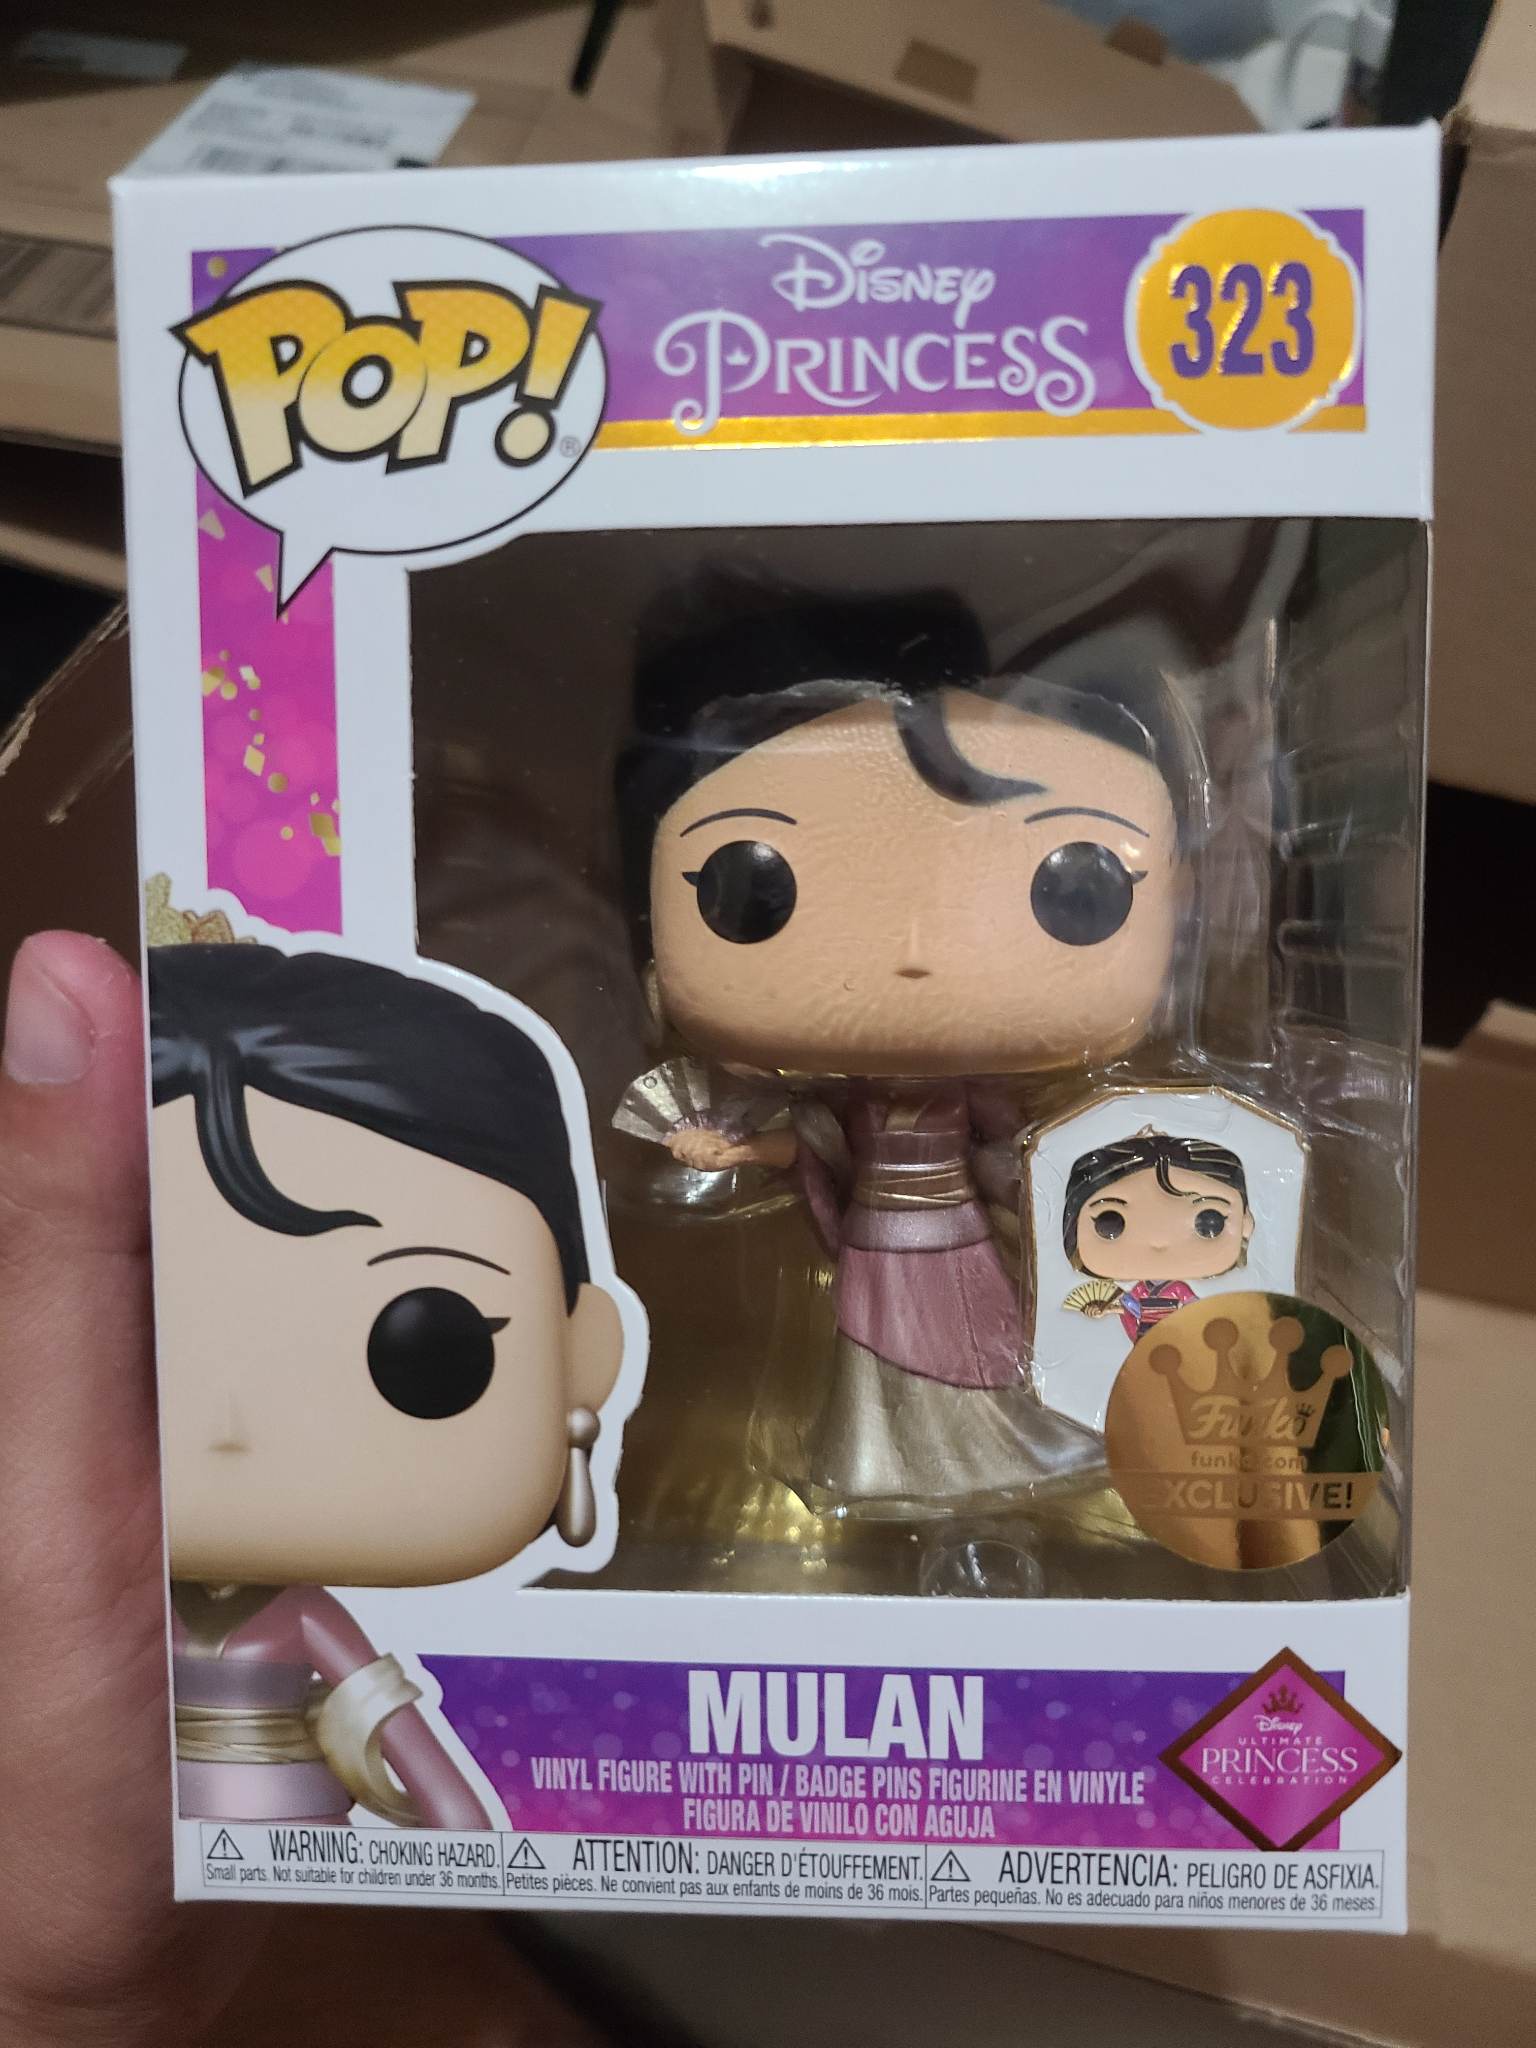 Funko Pop! Disney Ultimate Princess [323] - Mulan with Pin's